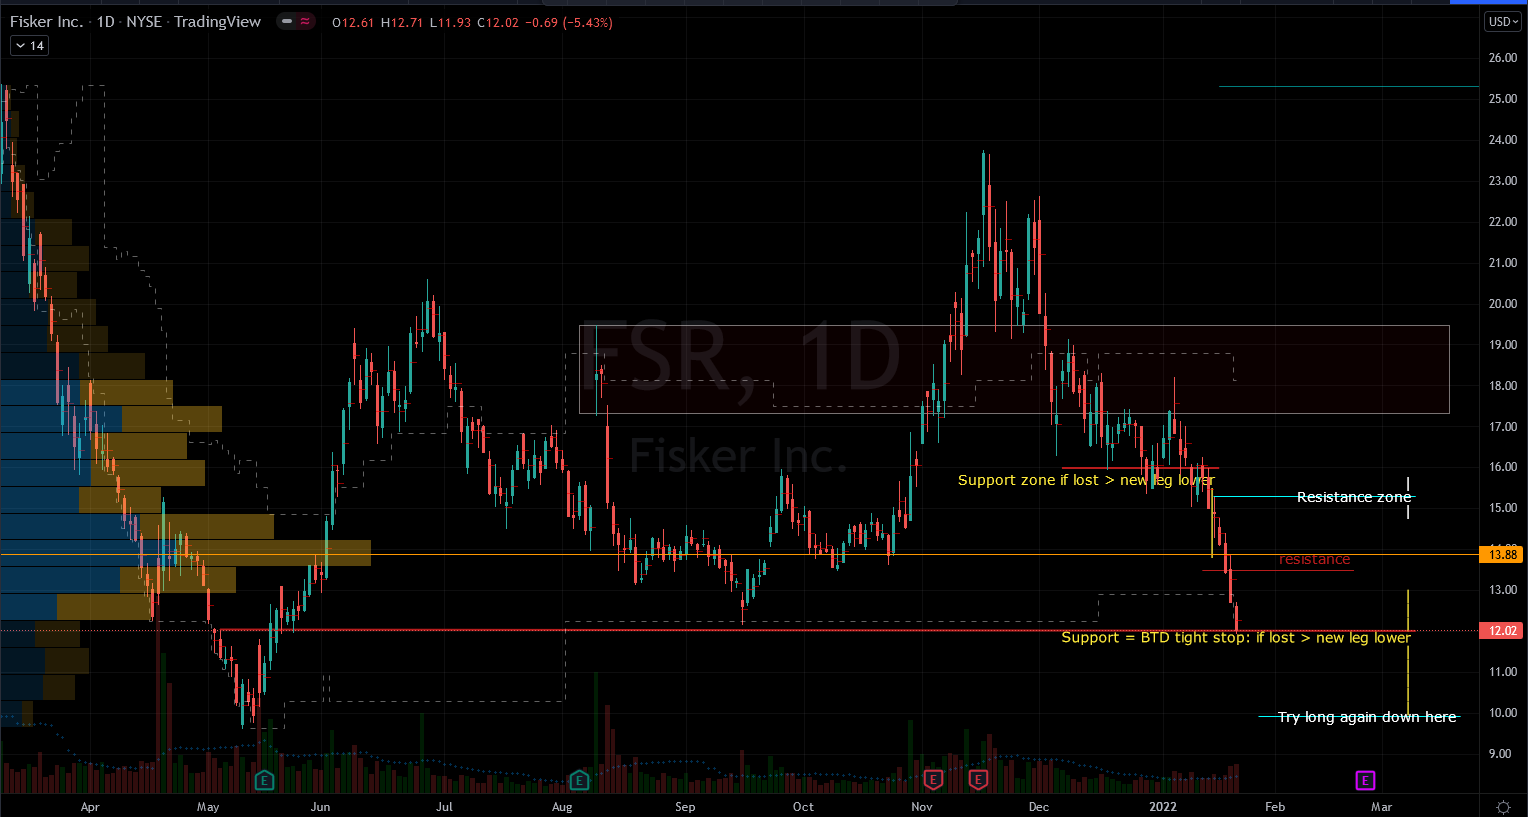 Fisker (FSR) Stock Chart Showing Potential Support Below